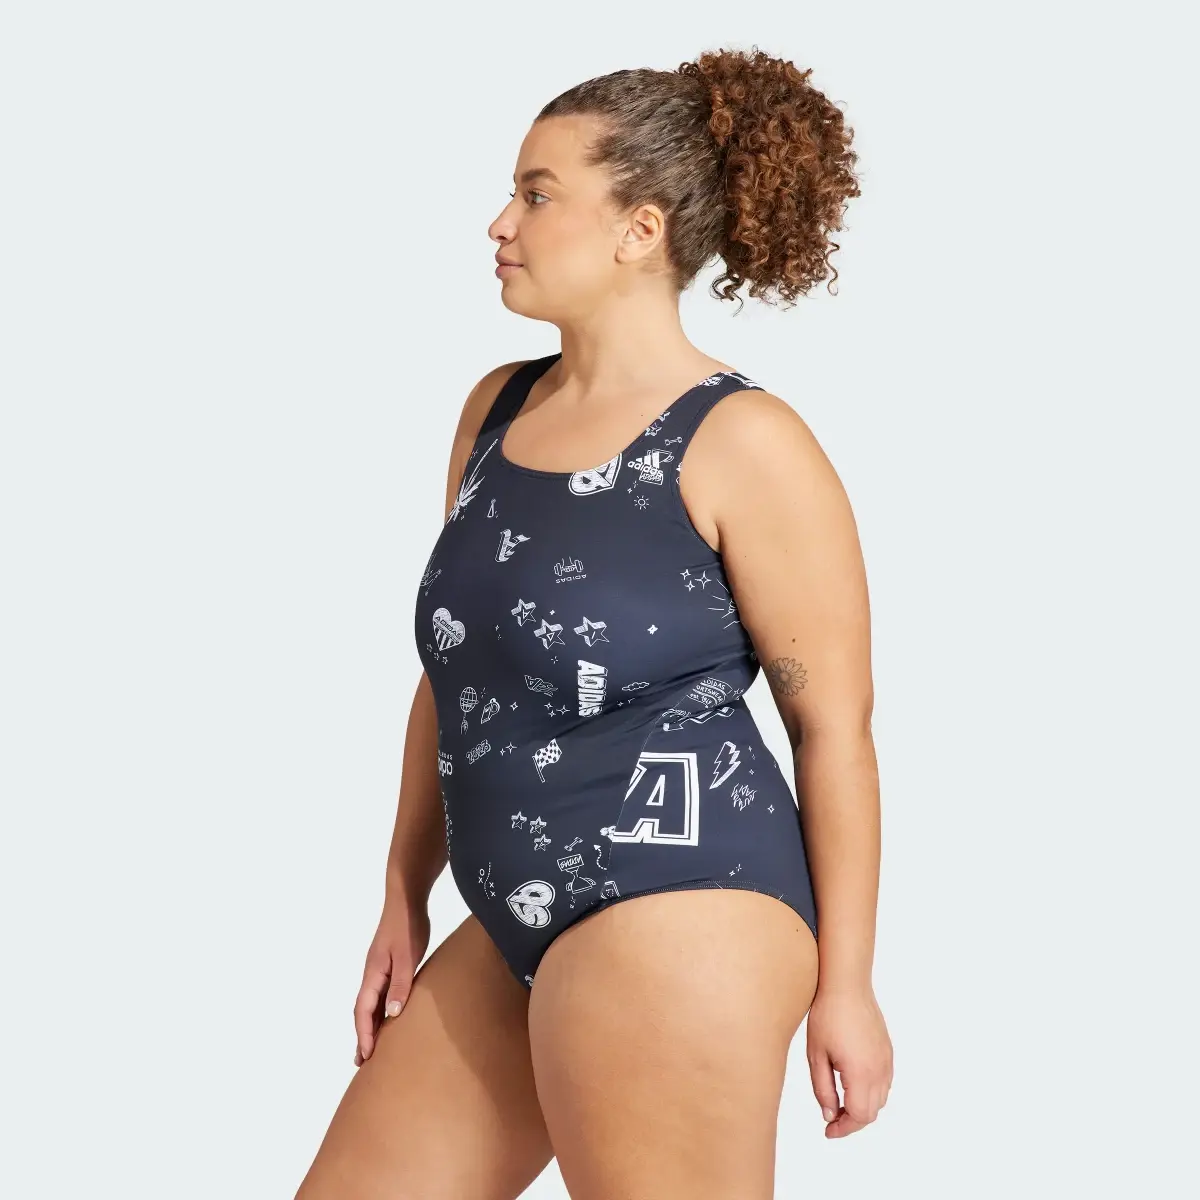 Adidas Brand Love Franchise Swimsuit (Plus Size). 3